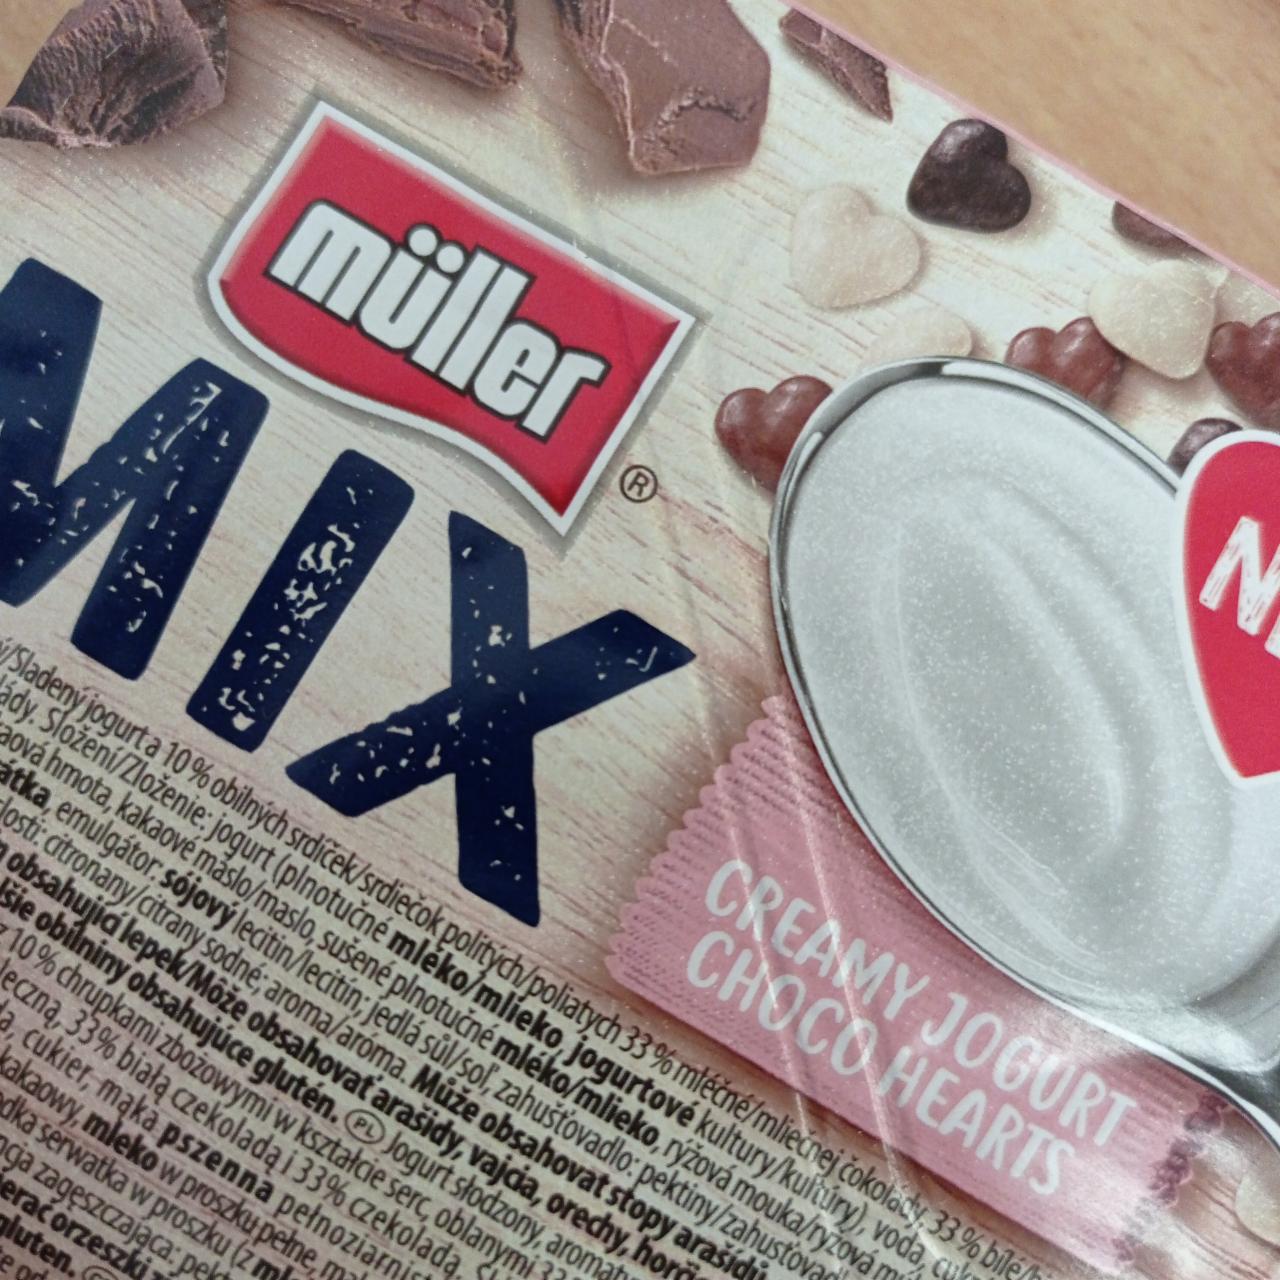 Fotografie - Mix Creamy Jogurt Choco Hearts Müller